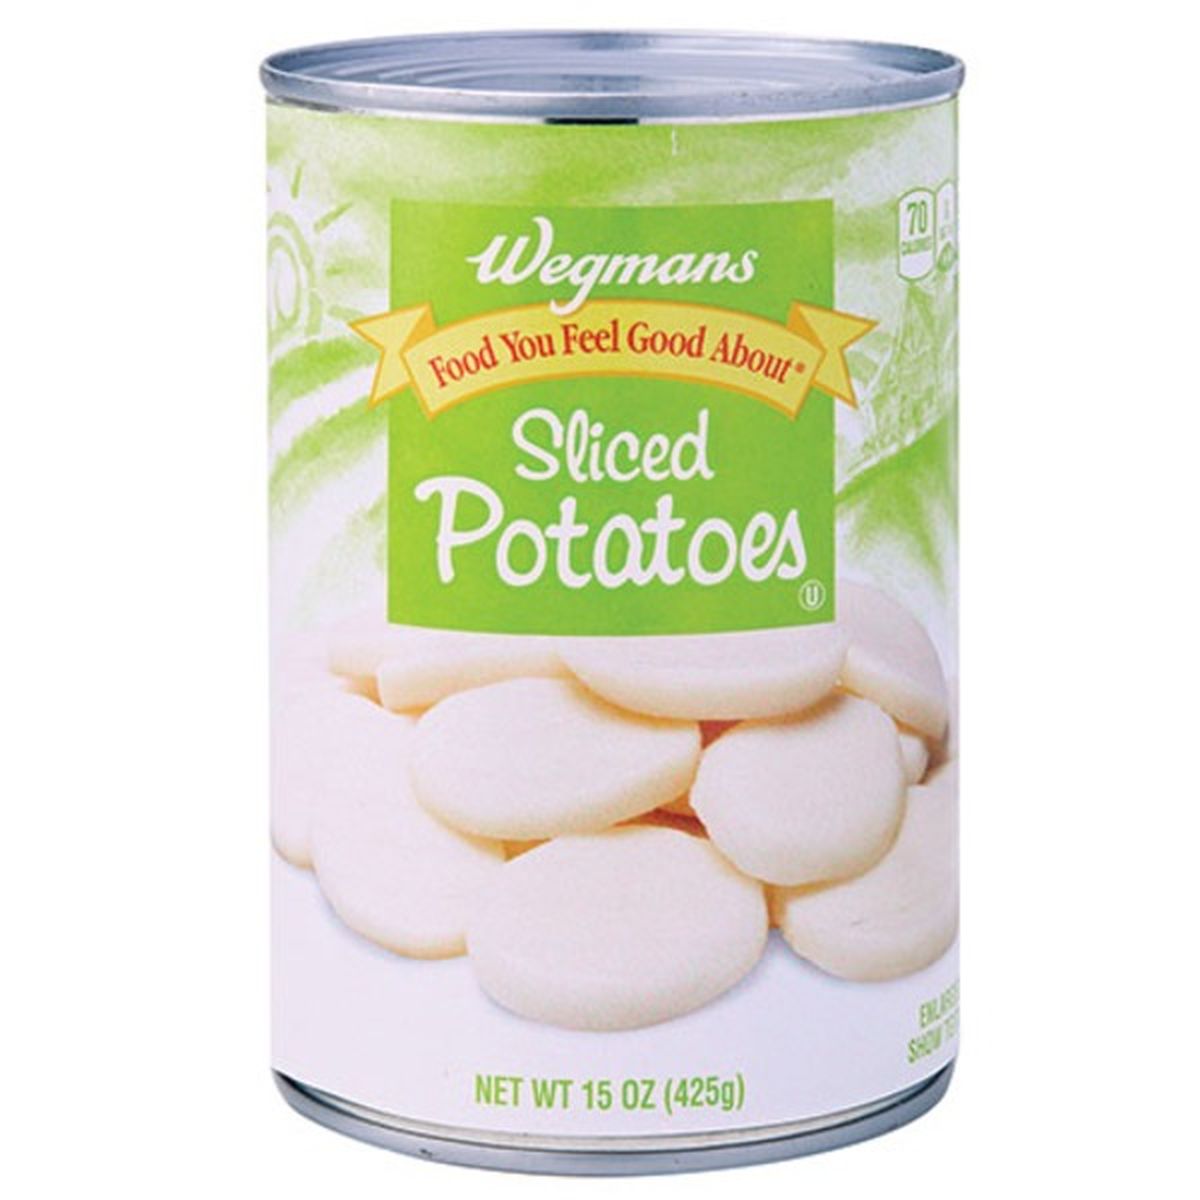 Calories in Wegmans Sliced Potatoes